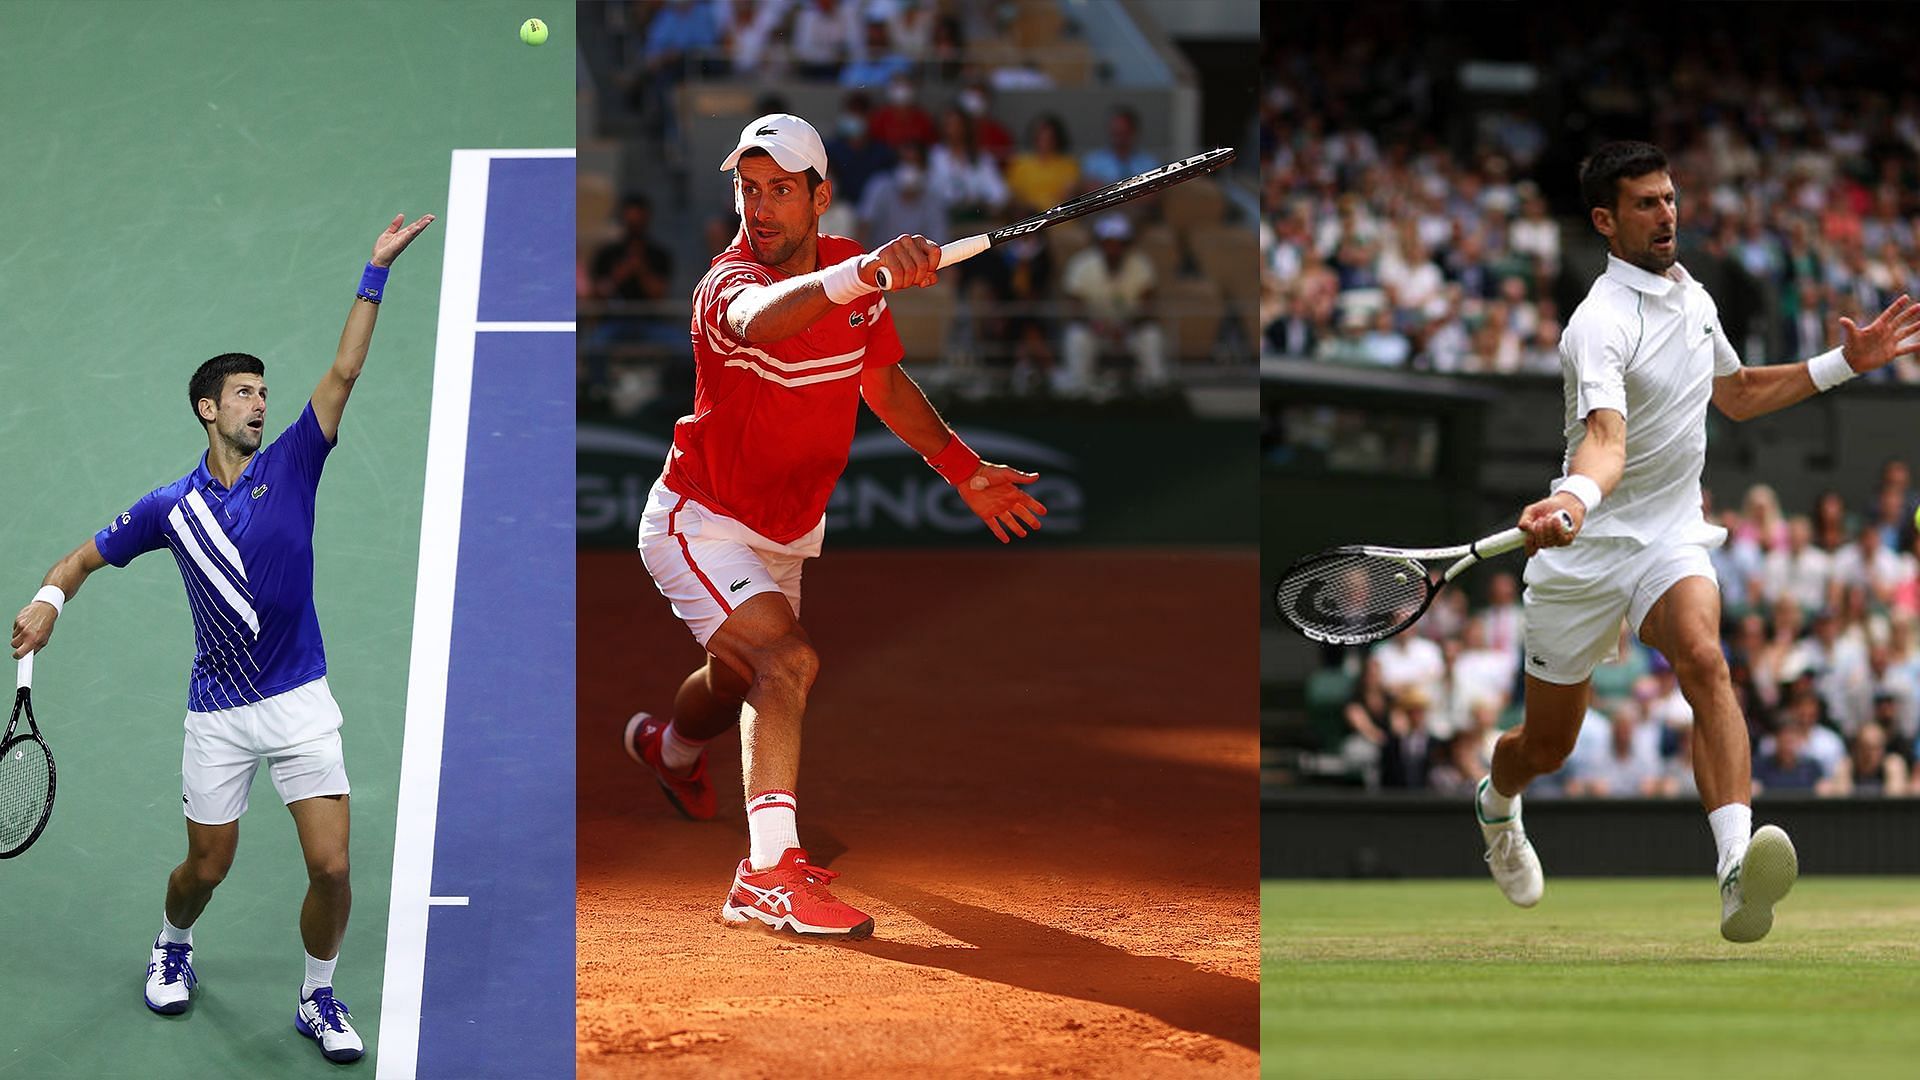 Novak Djokovic is a 23-time Grand Slam champion.